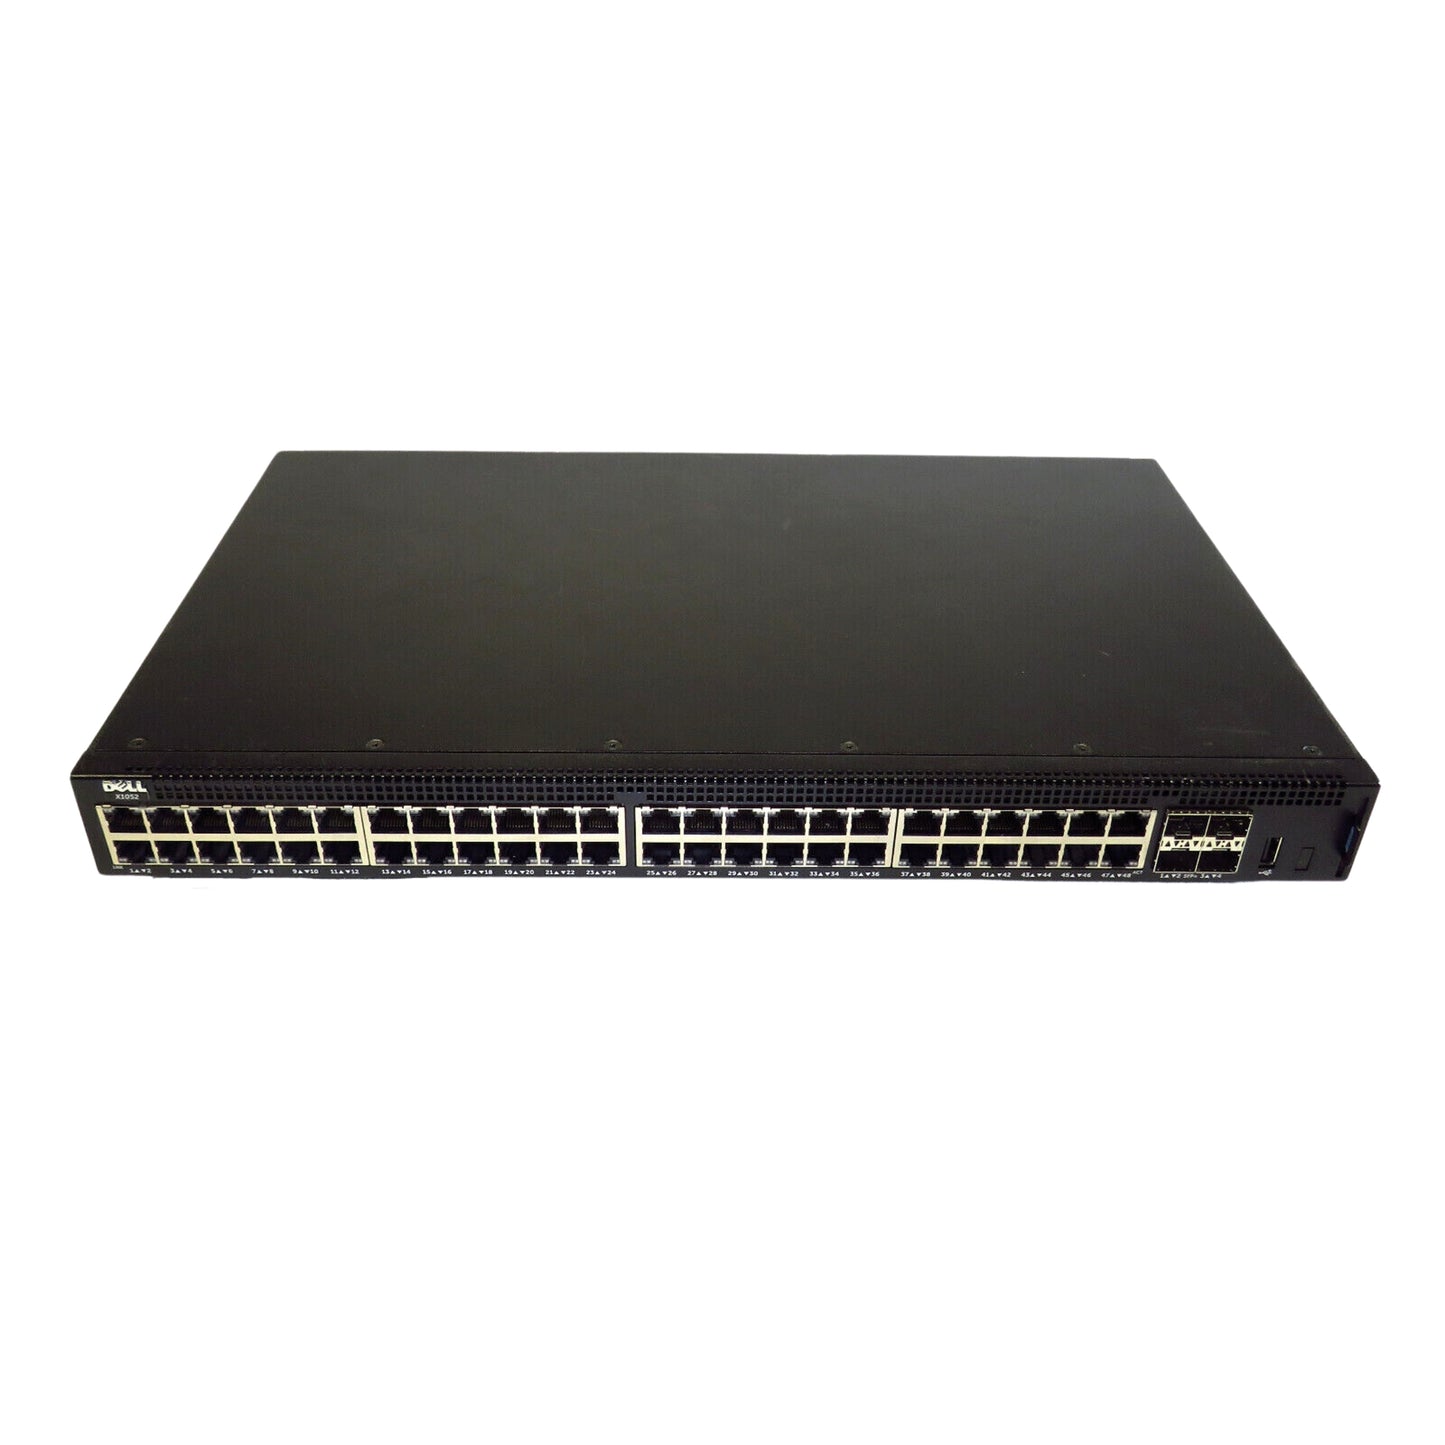 Dell K3WXK X1052 48 Port PoE Gigabit Ethernet Managed Switch (Refurbished)